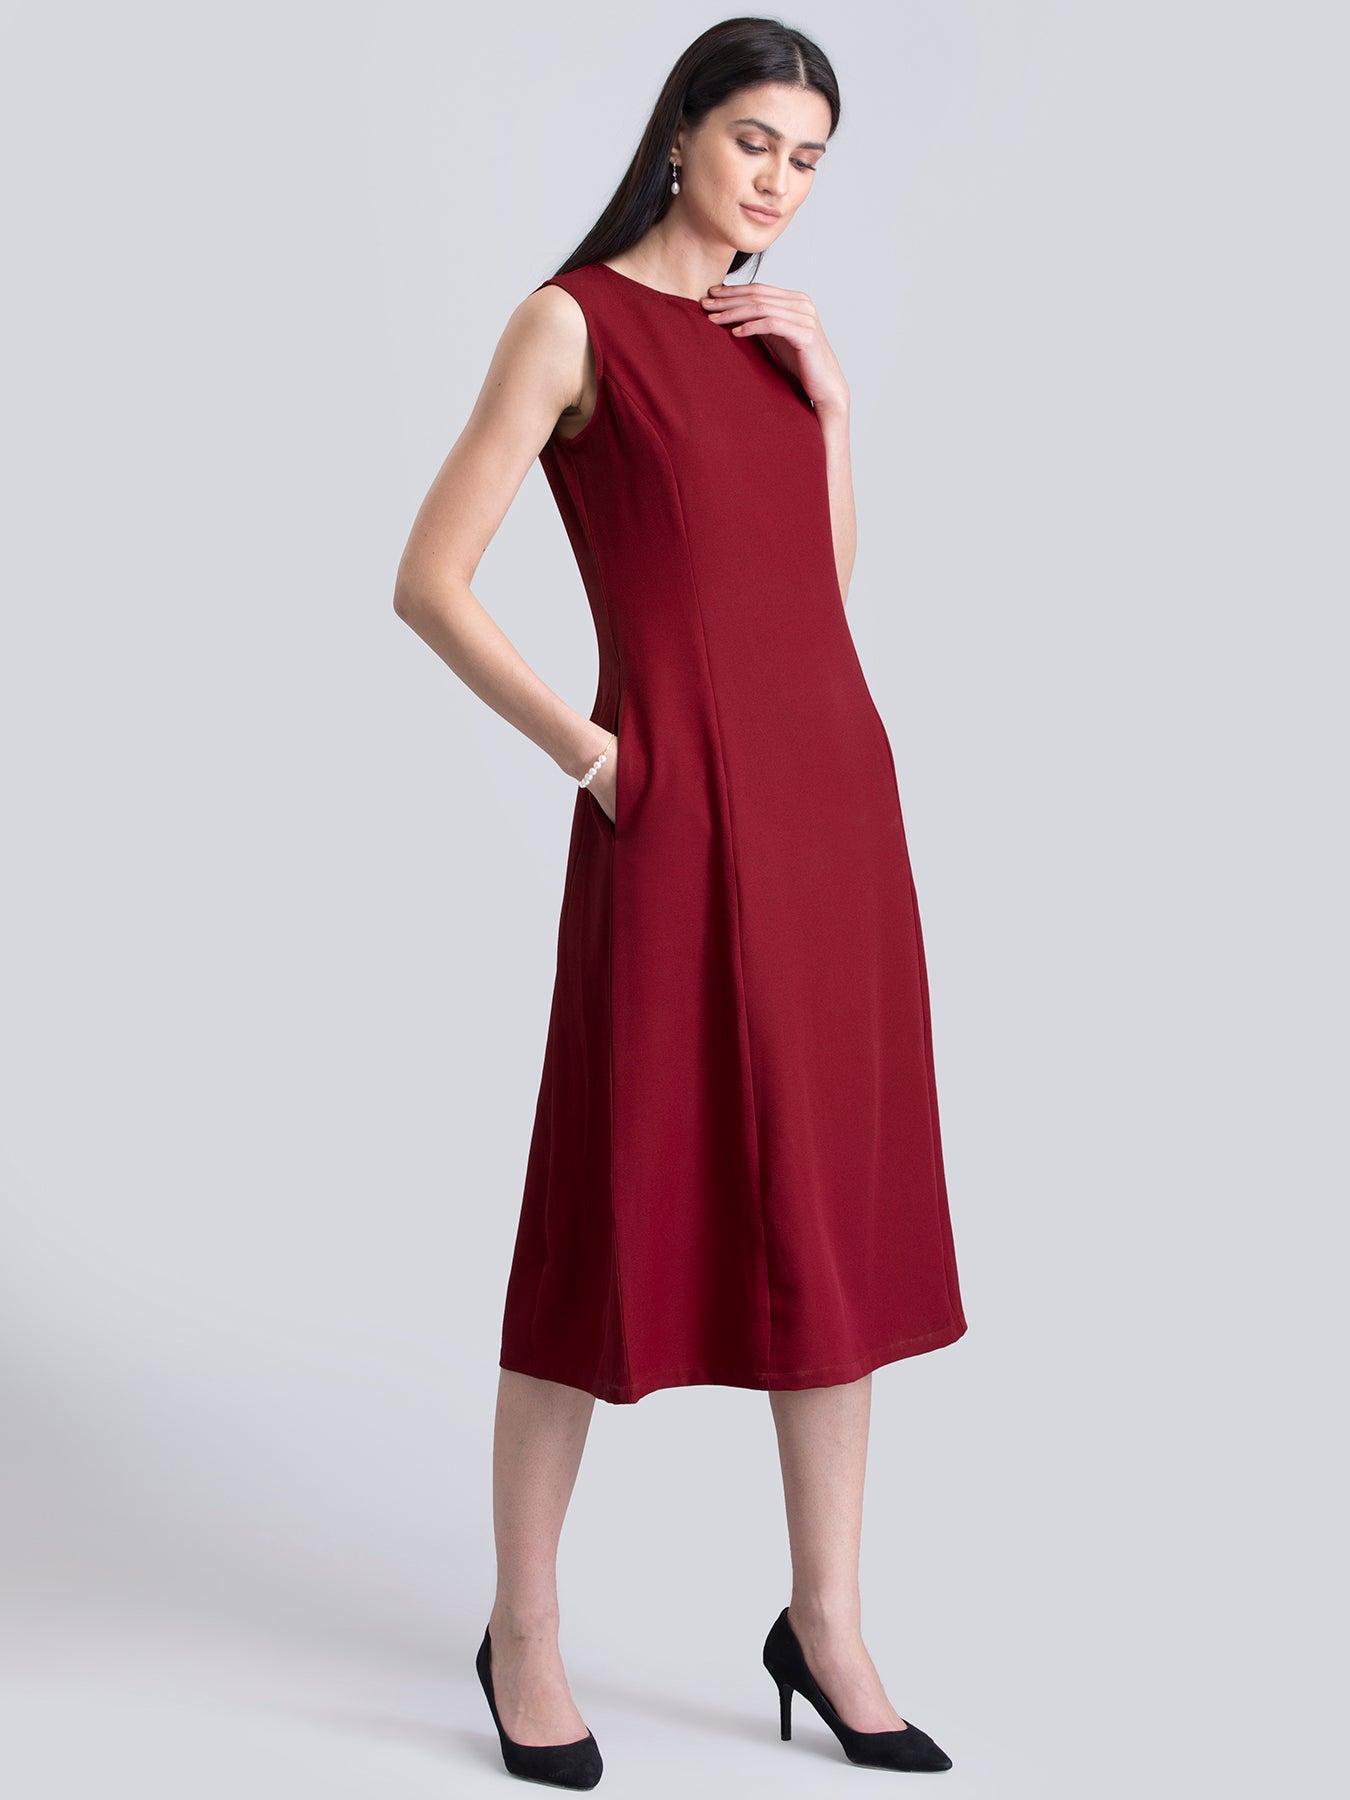 Stylised Neck A Line Dress - Red| Formal Dresses